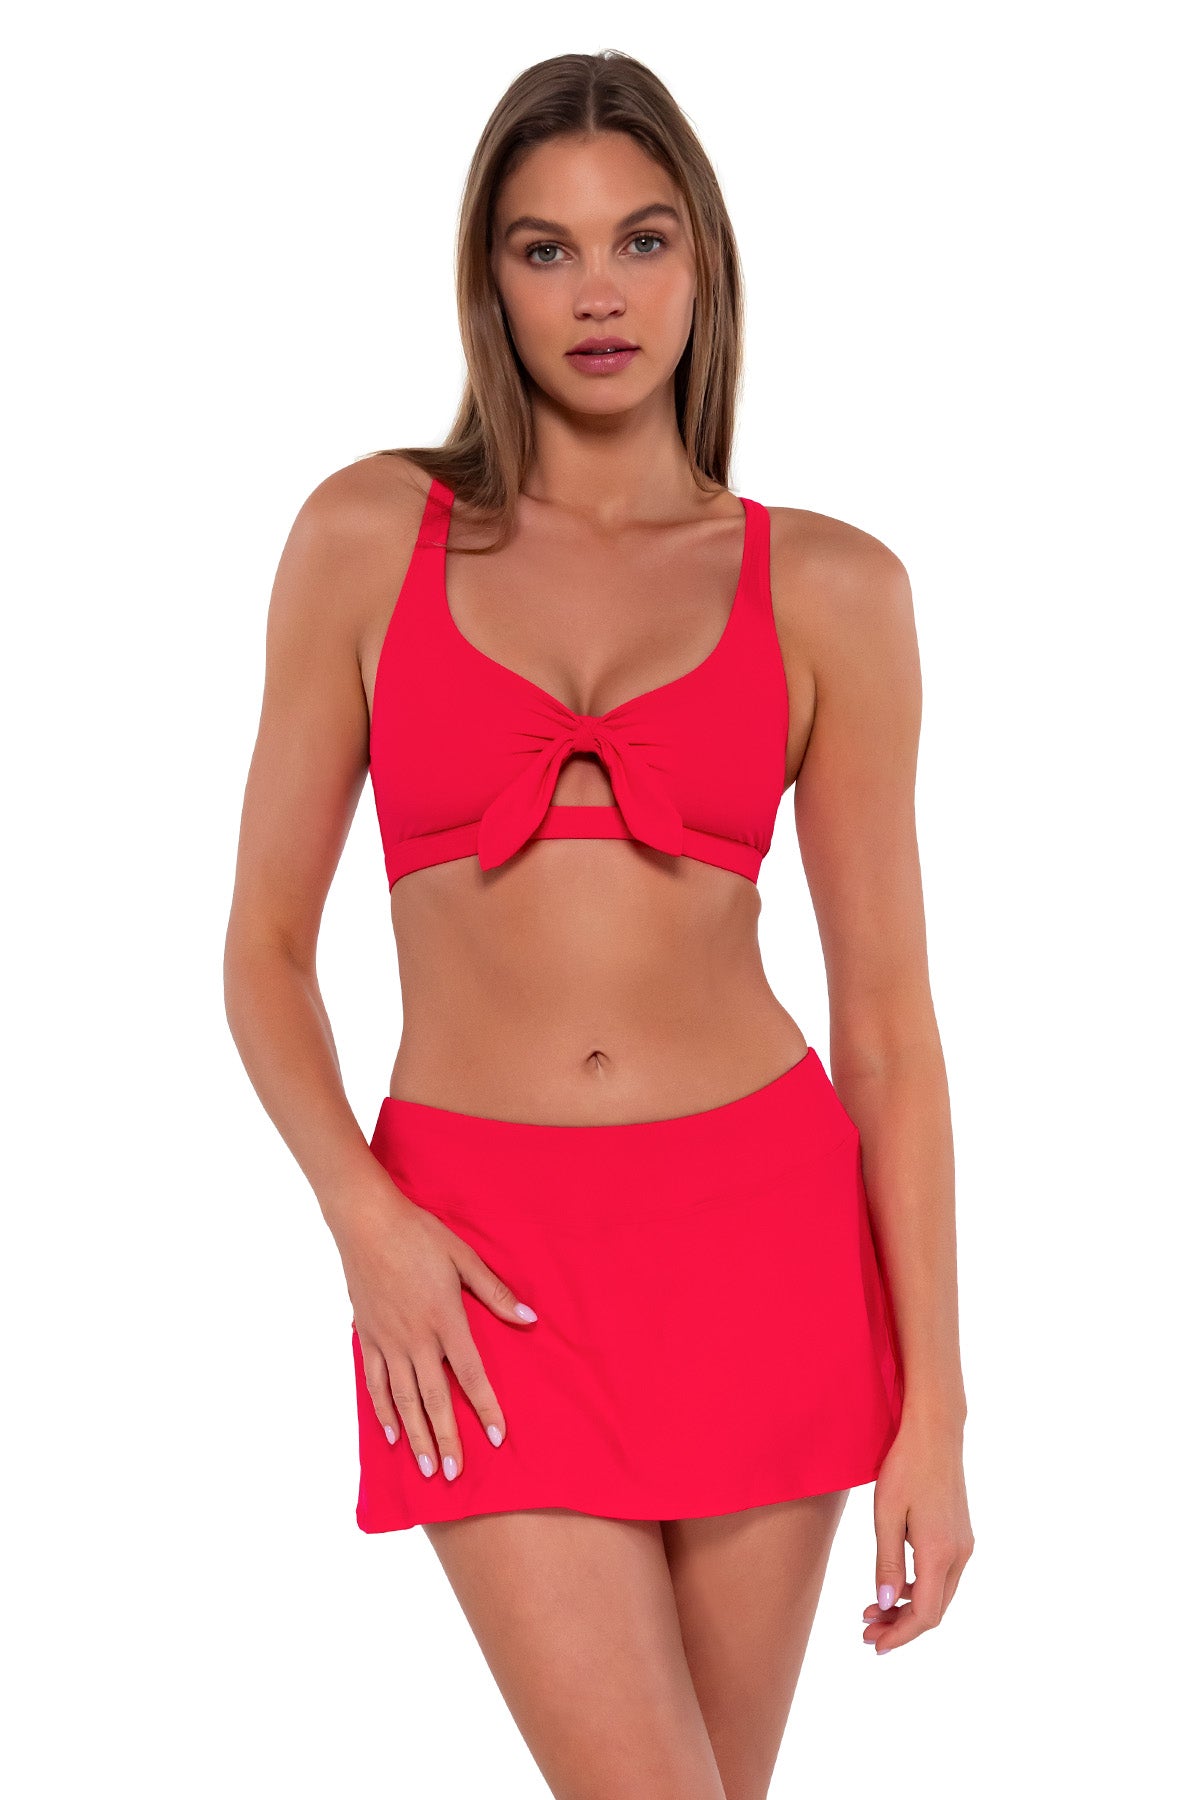 Front pose #2 of Daria wearing Sunsets Geranium Sporty Swim Skirt with matching Brandi Bralette bikini top